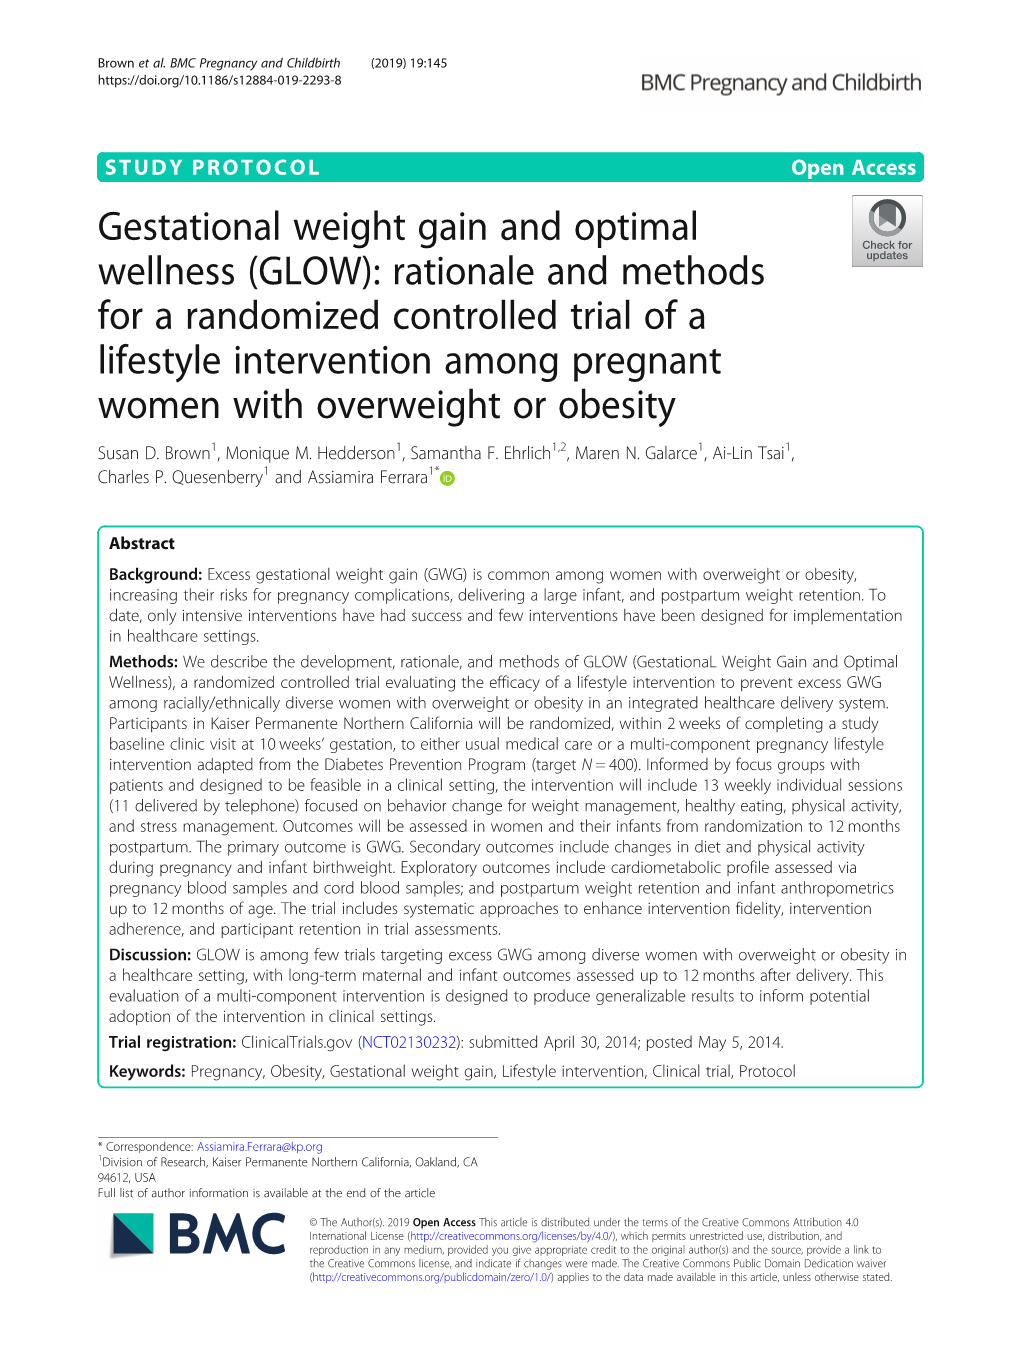 Gestational Weight Gain and Optimal Wellness (GLOW)